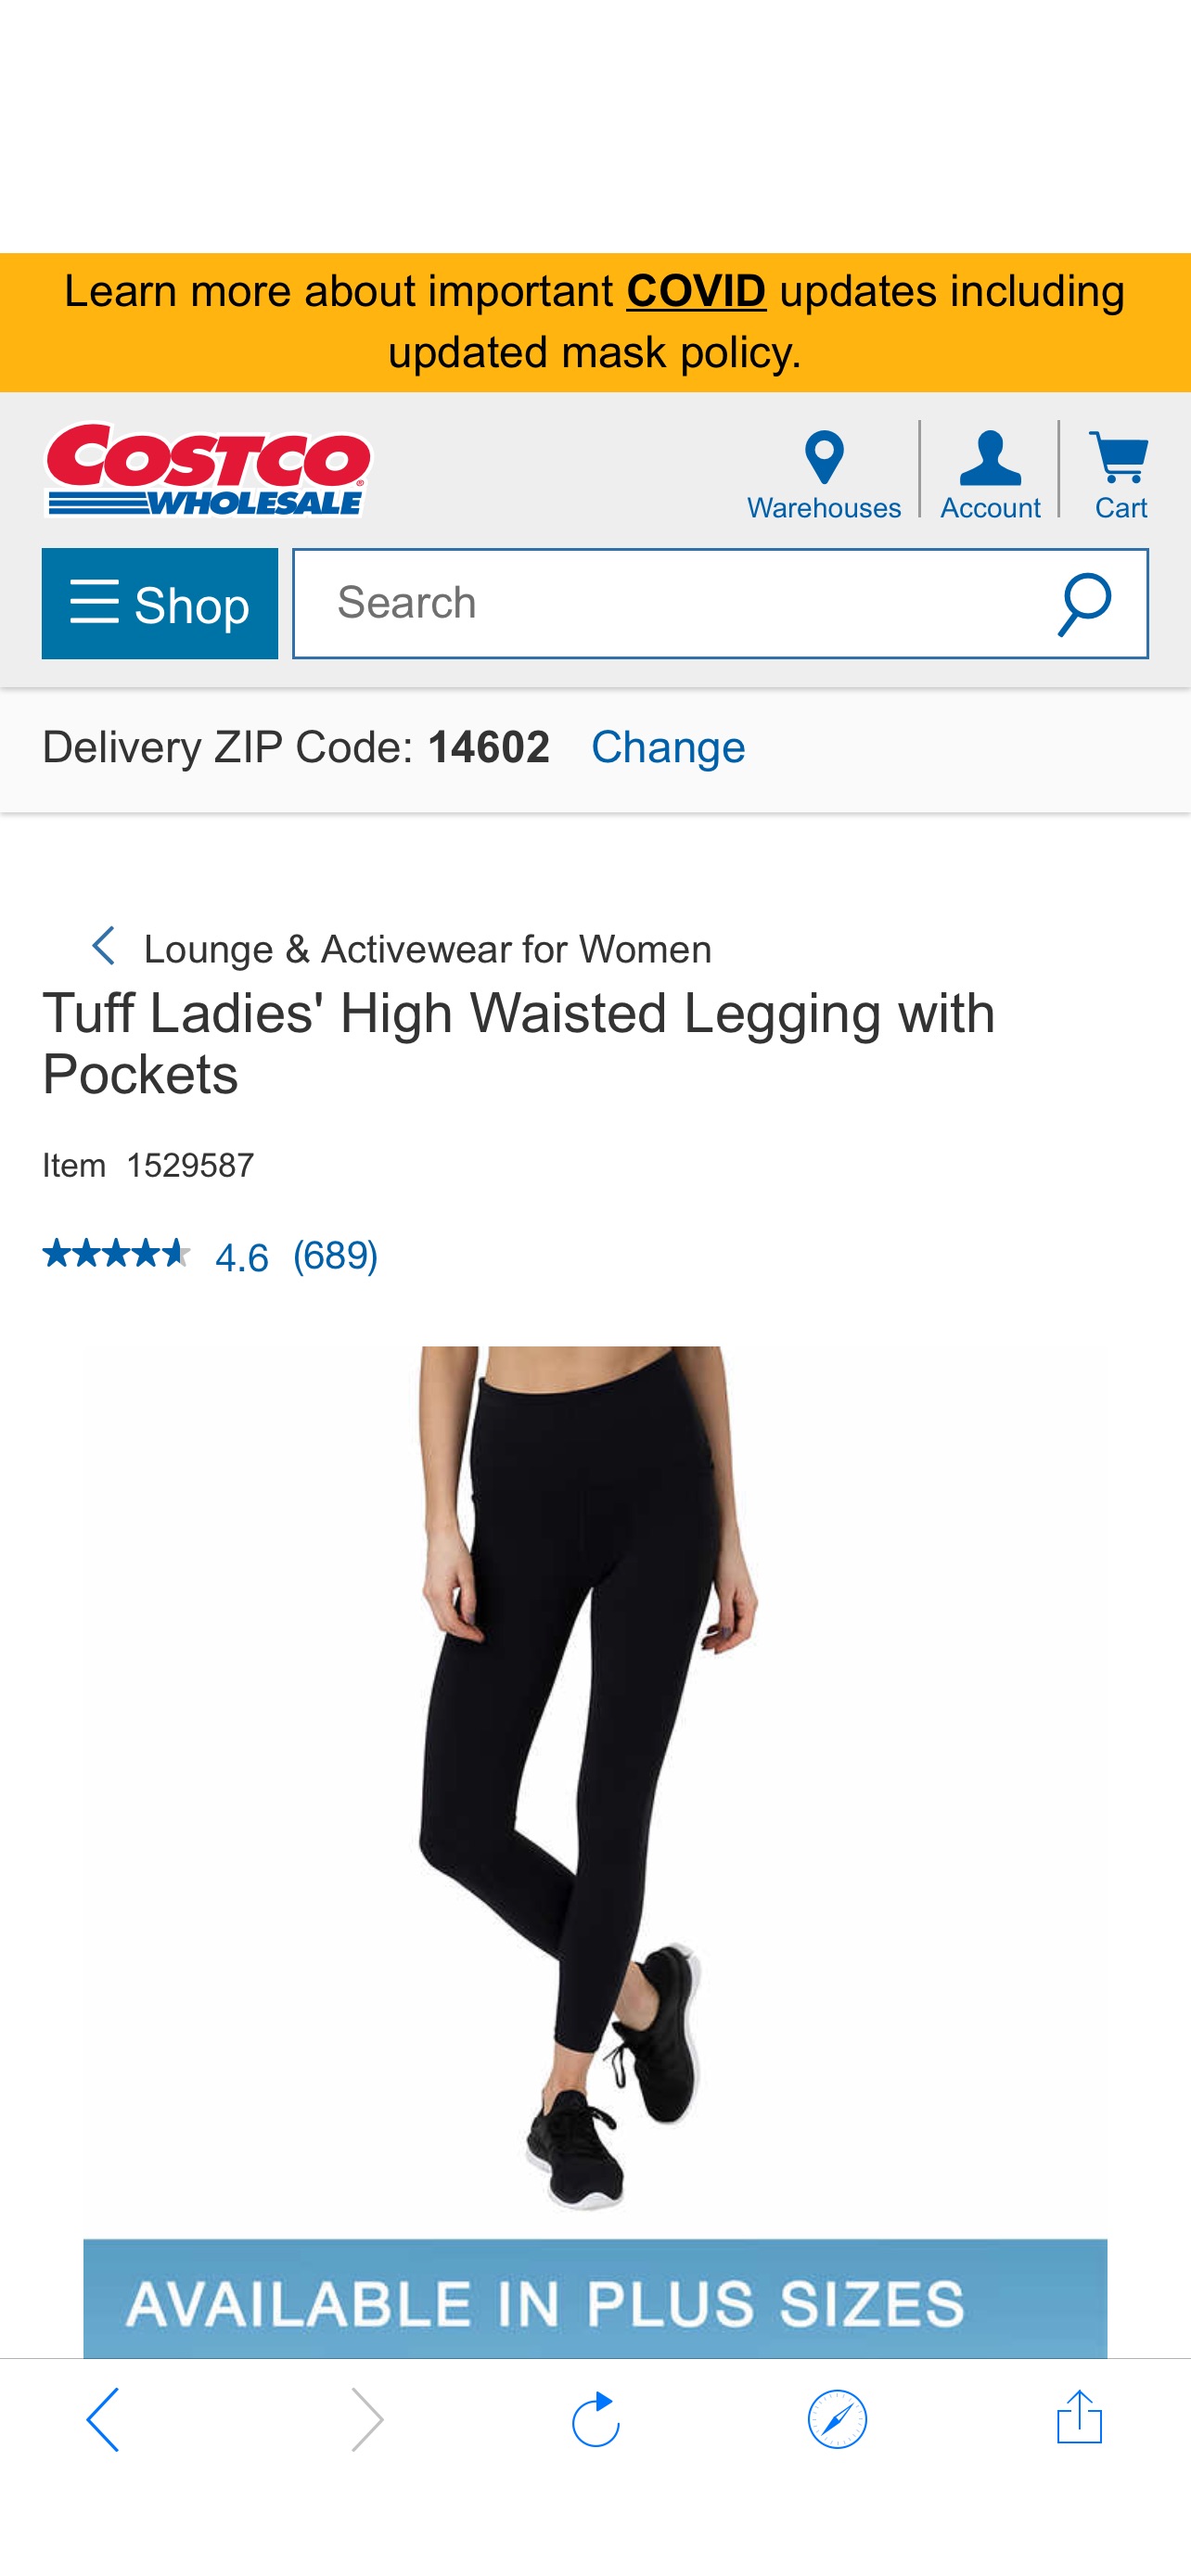 Tuff Ladies' High Waisted Legging with Pockets | Costco瑜伽裤